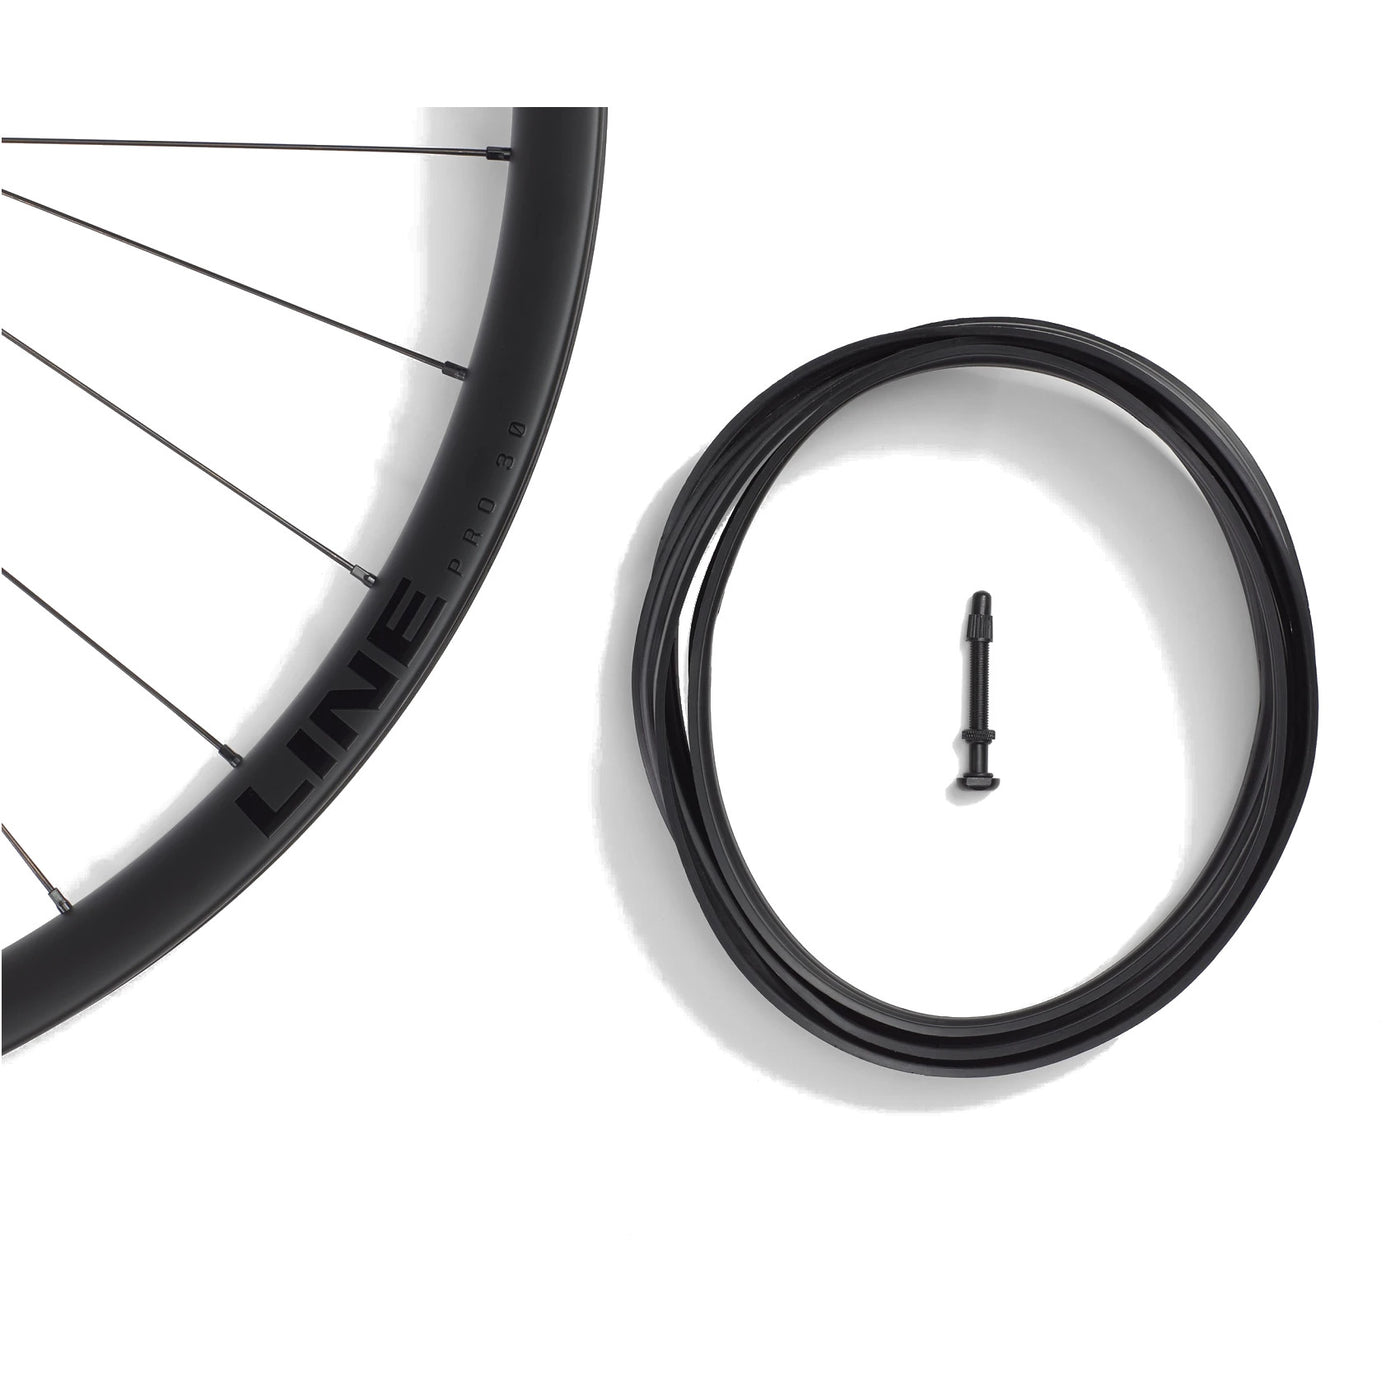 Line Pro 30 Carbon Rear Wheel